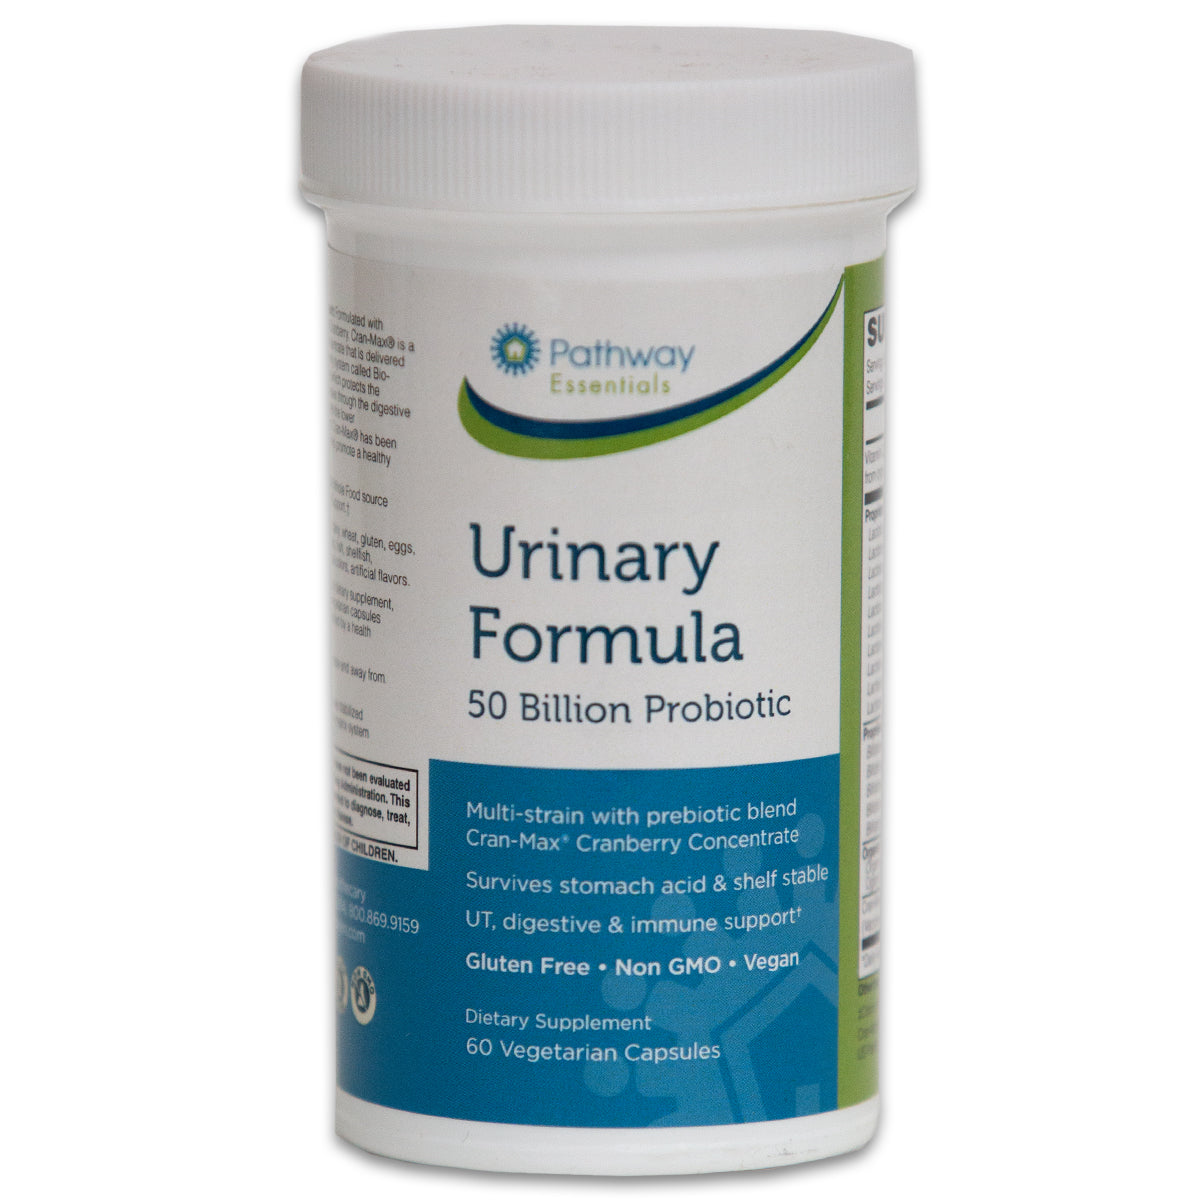 Urinary Formula 50 Billion Probiotic